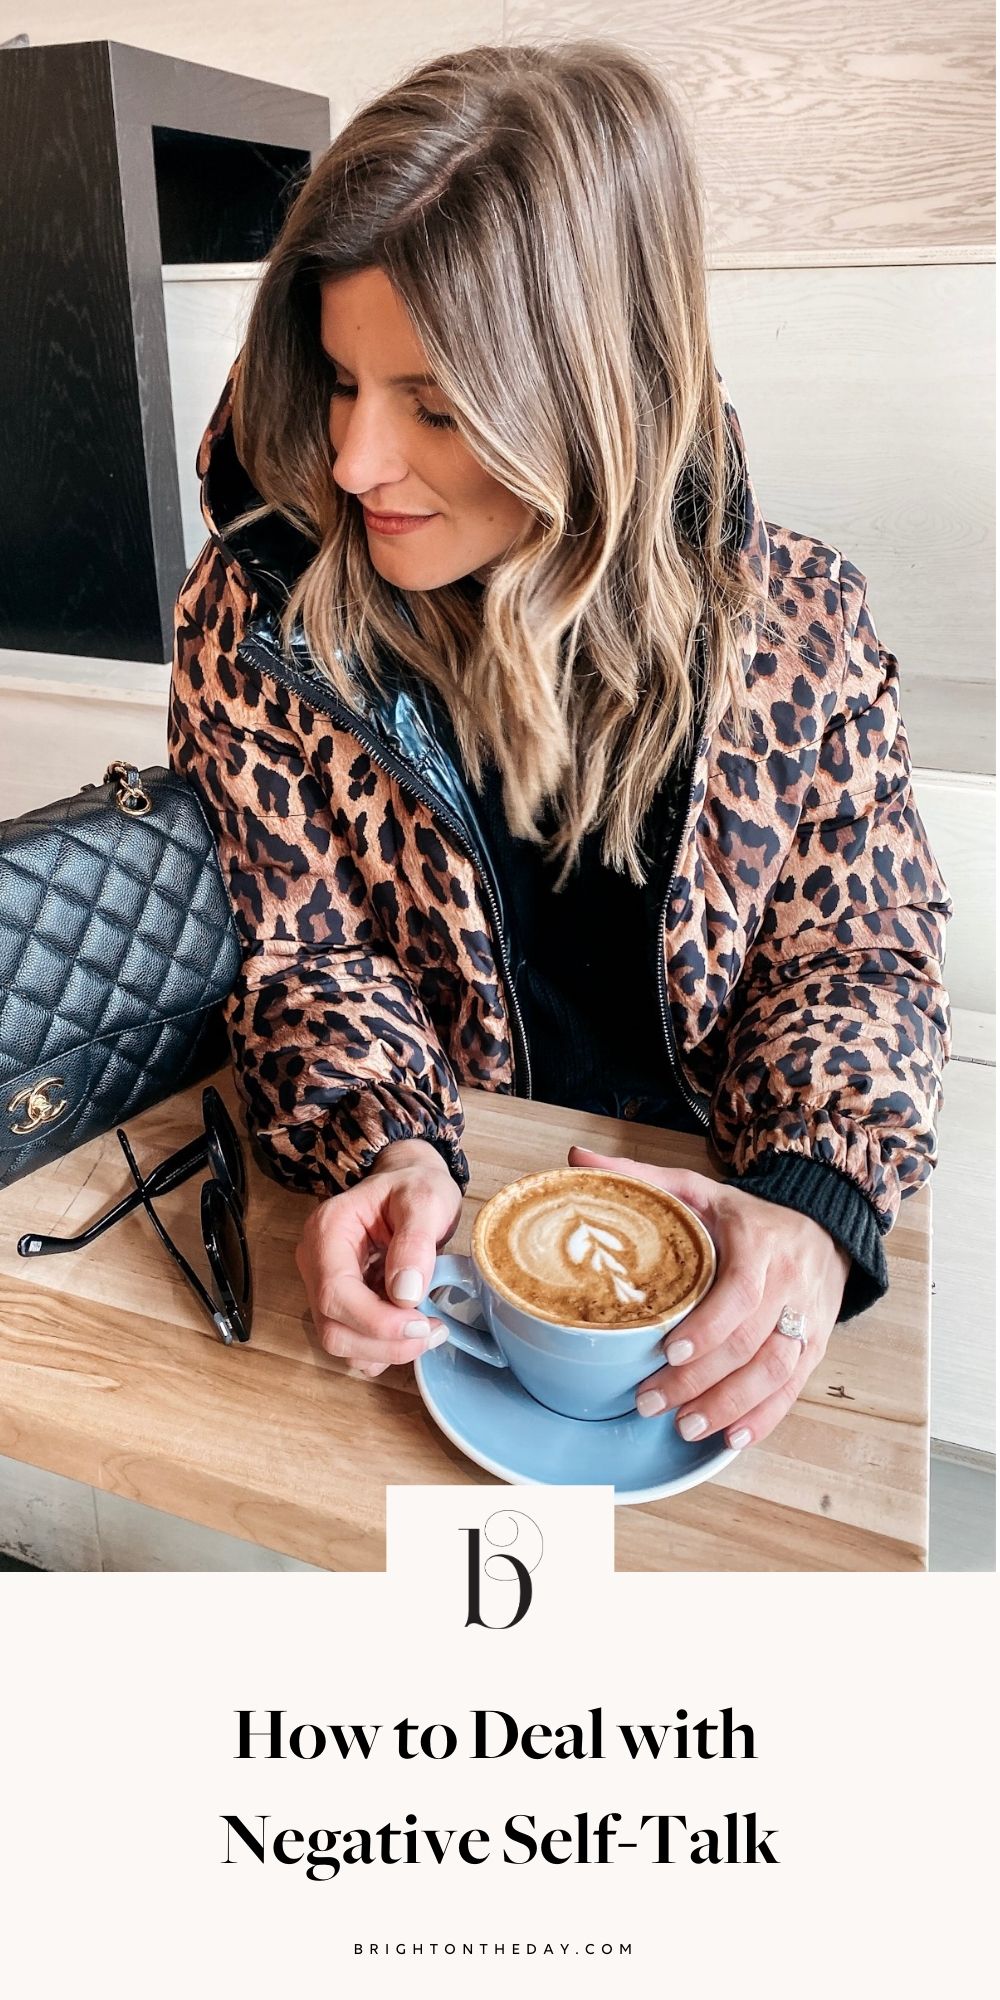 brighton keller at coffee shop wearing leopard bomber